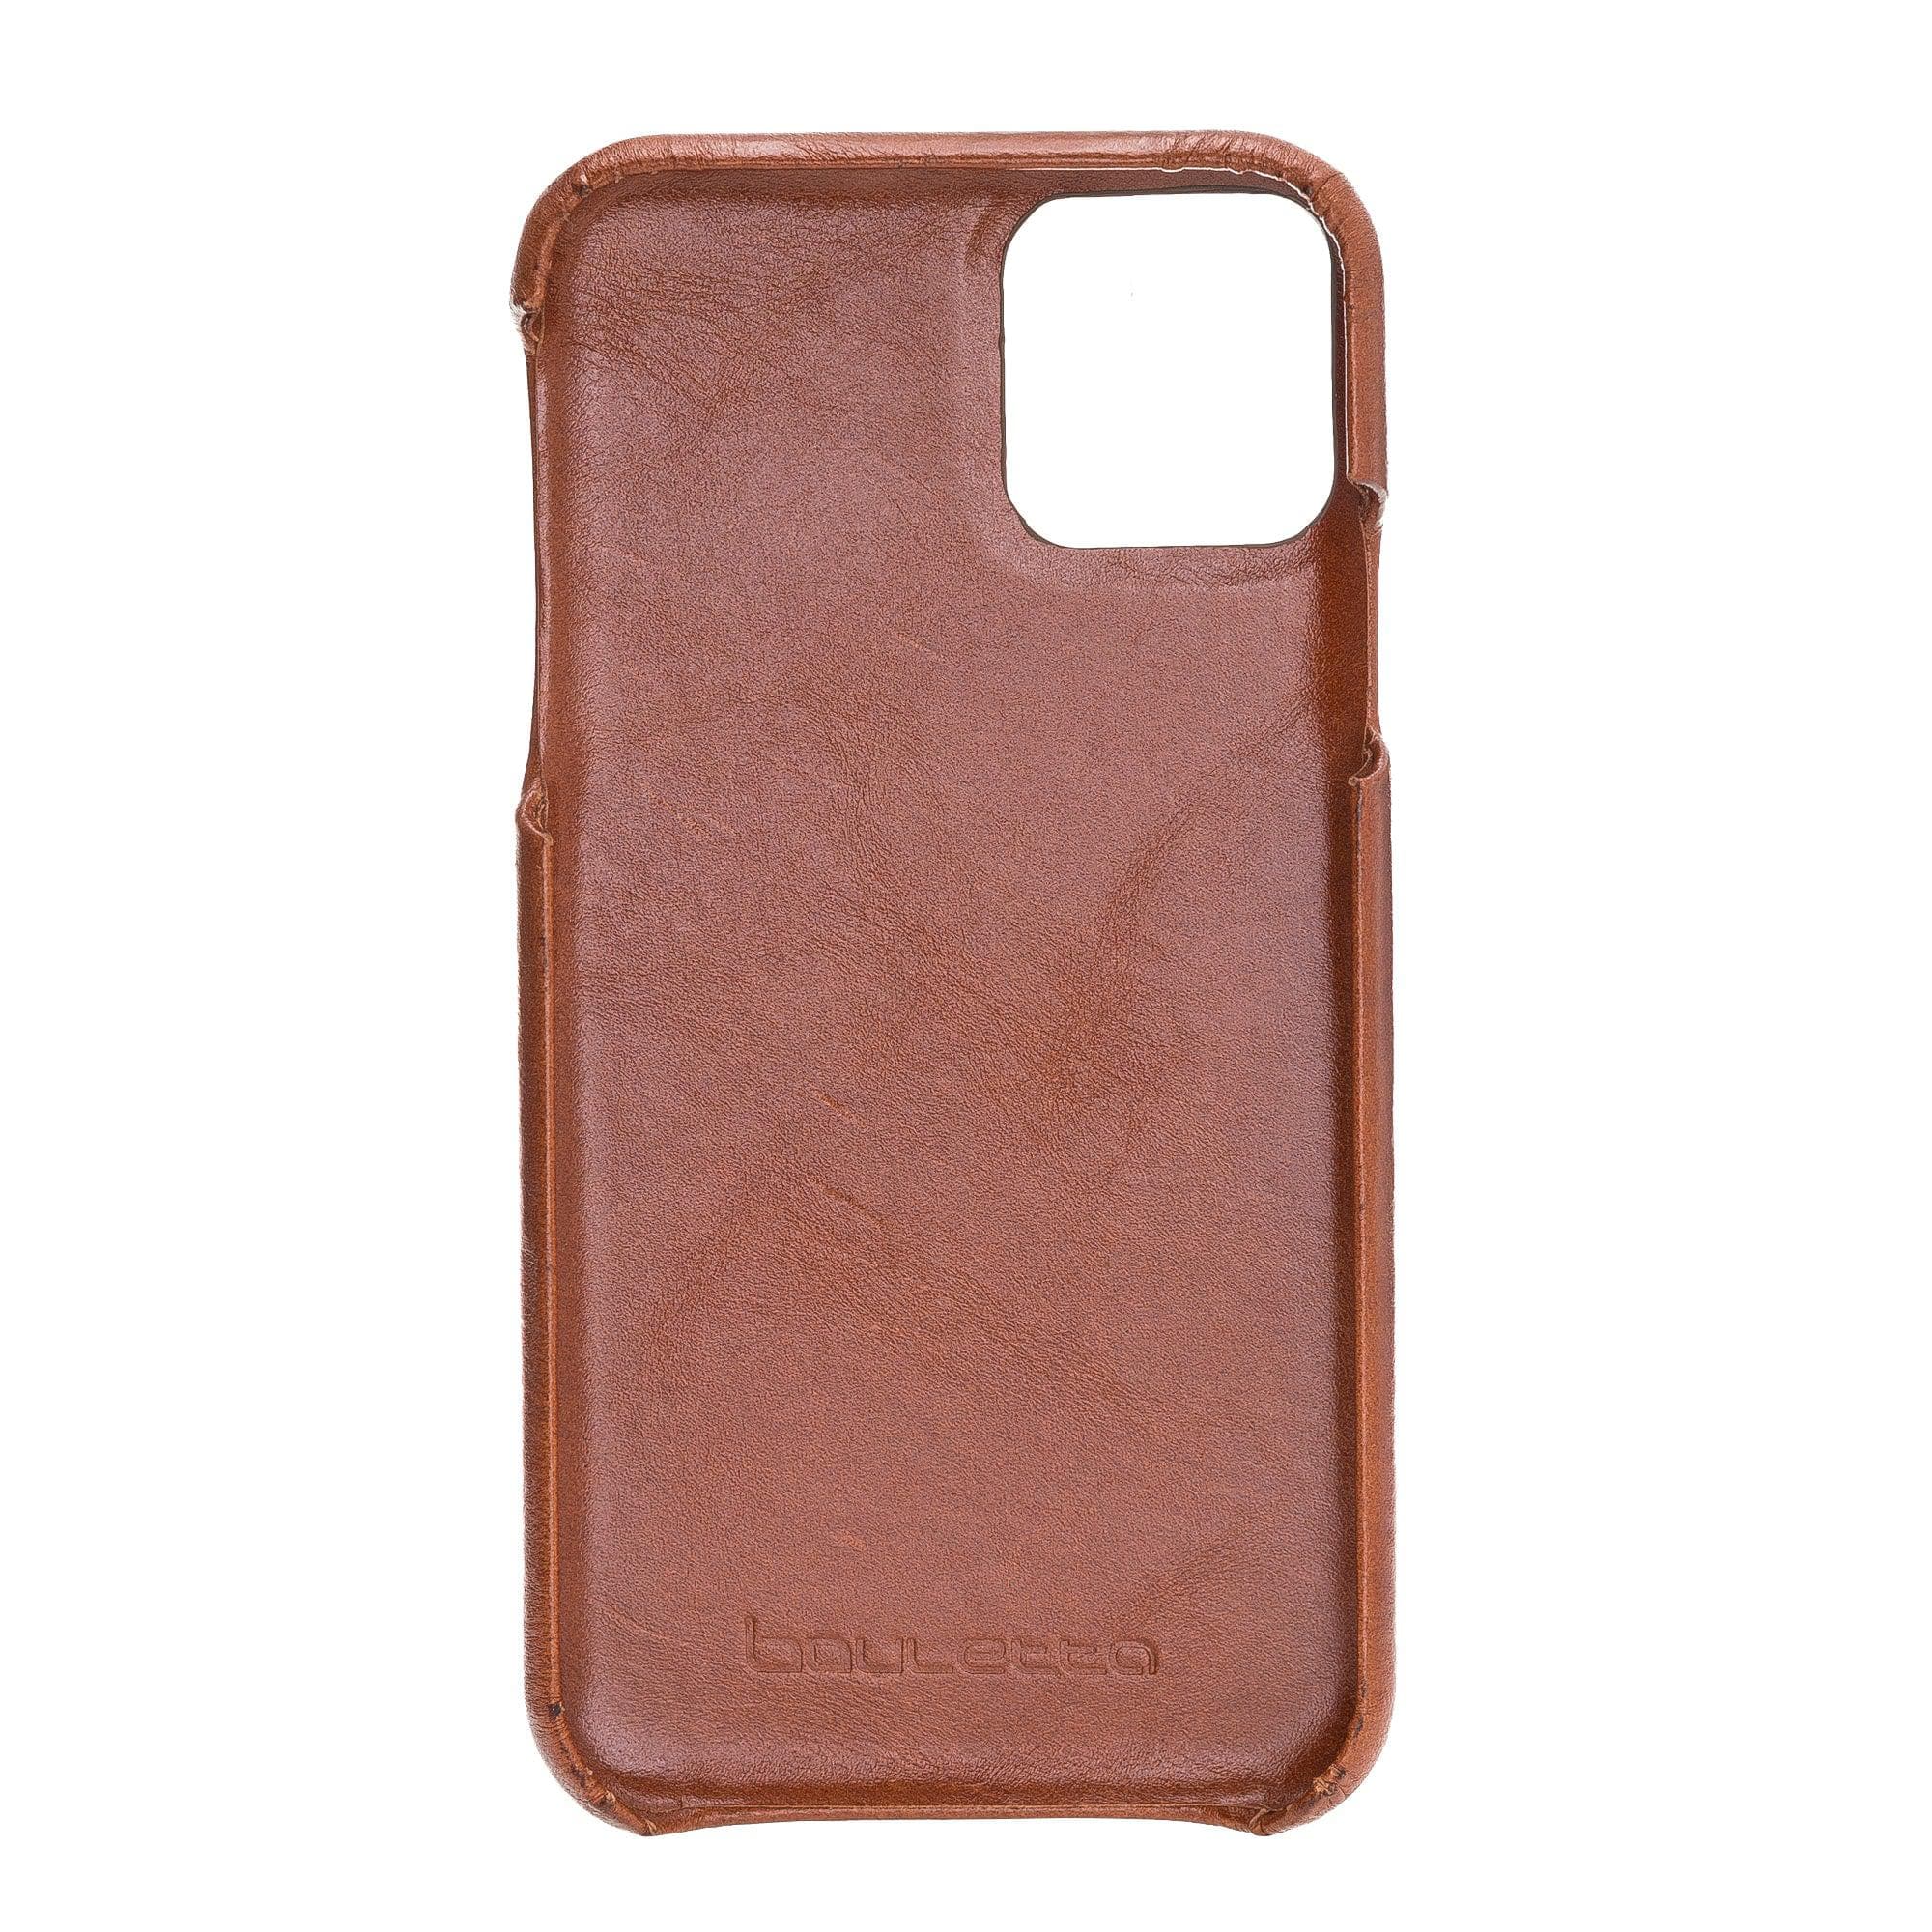 Bouletta Fully Leather Back Cover for Apple iPhone 11 Series Bouletta LTD